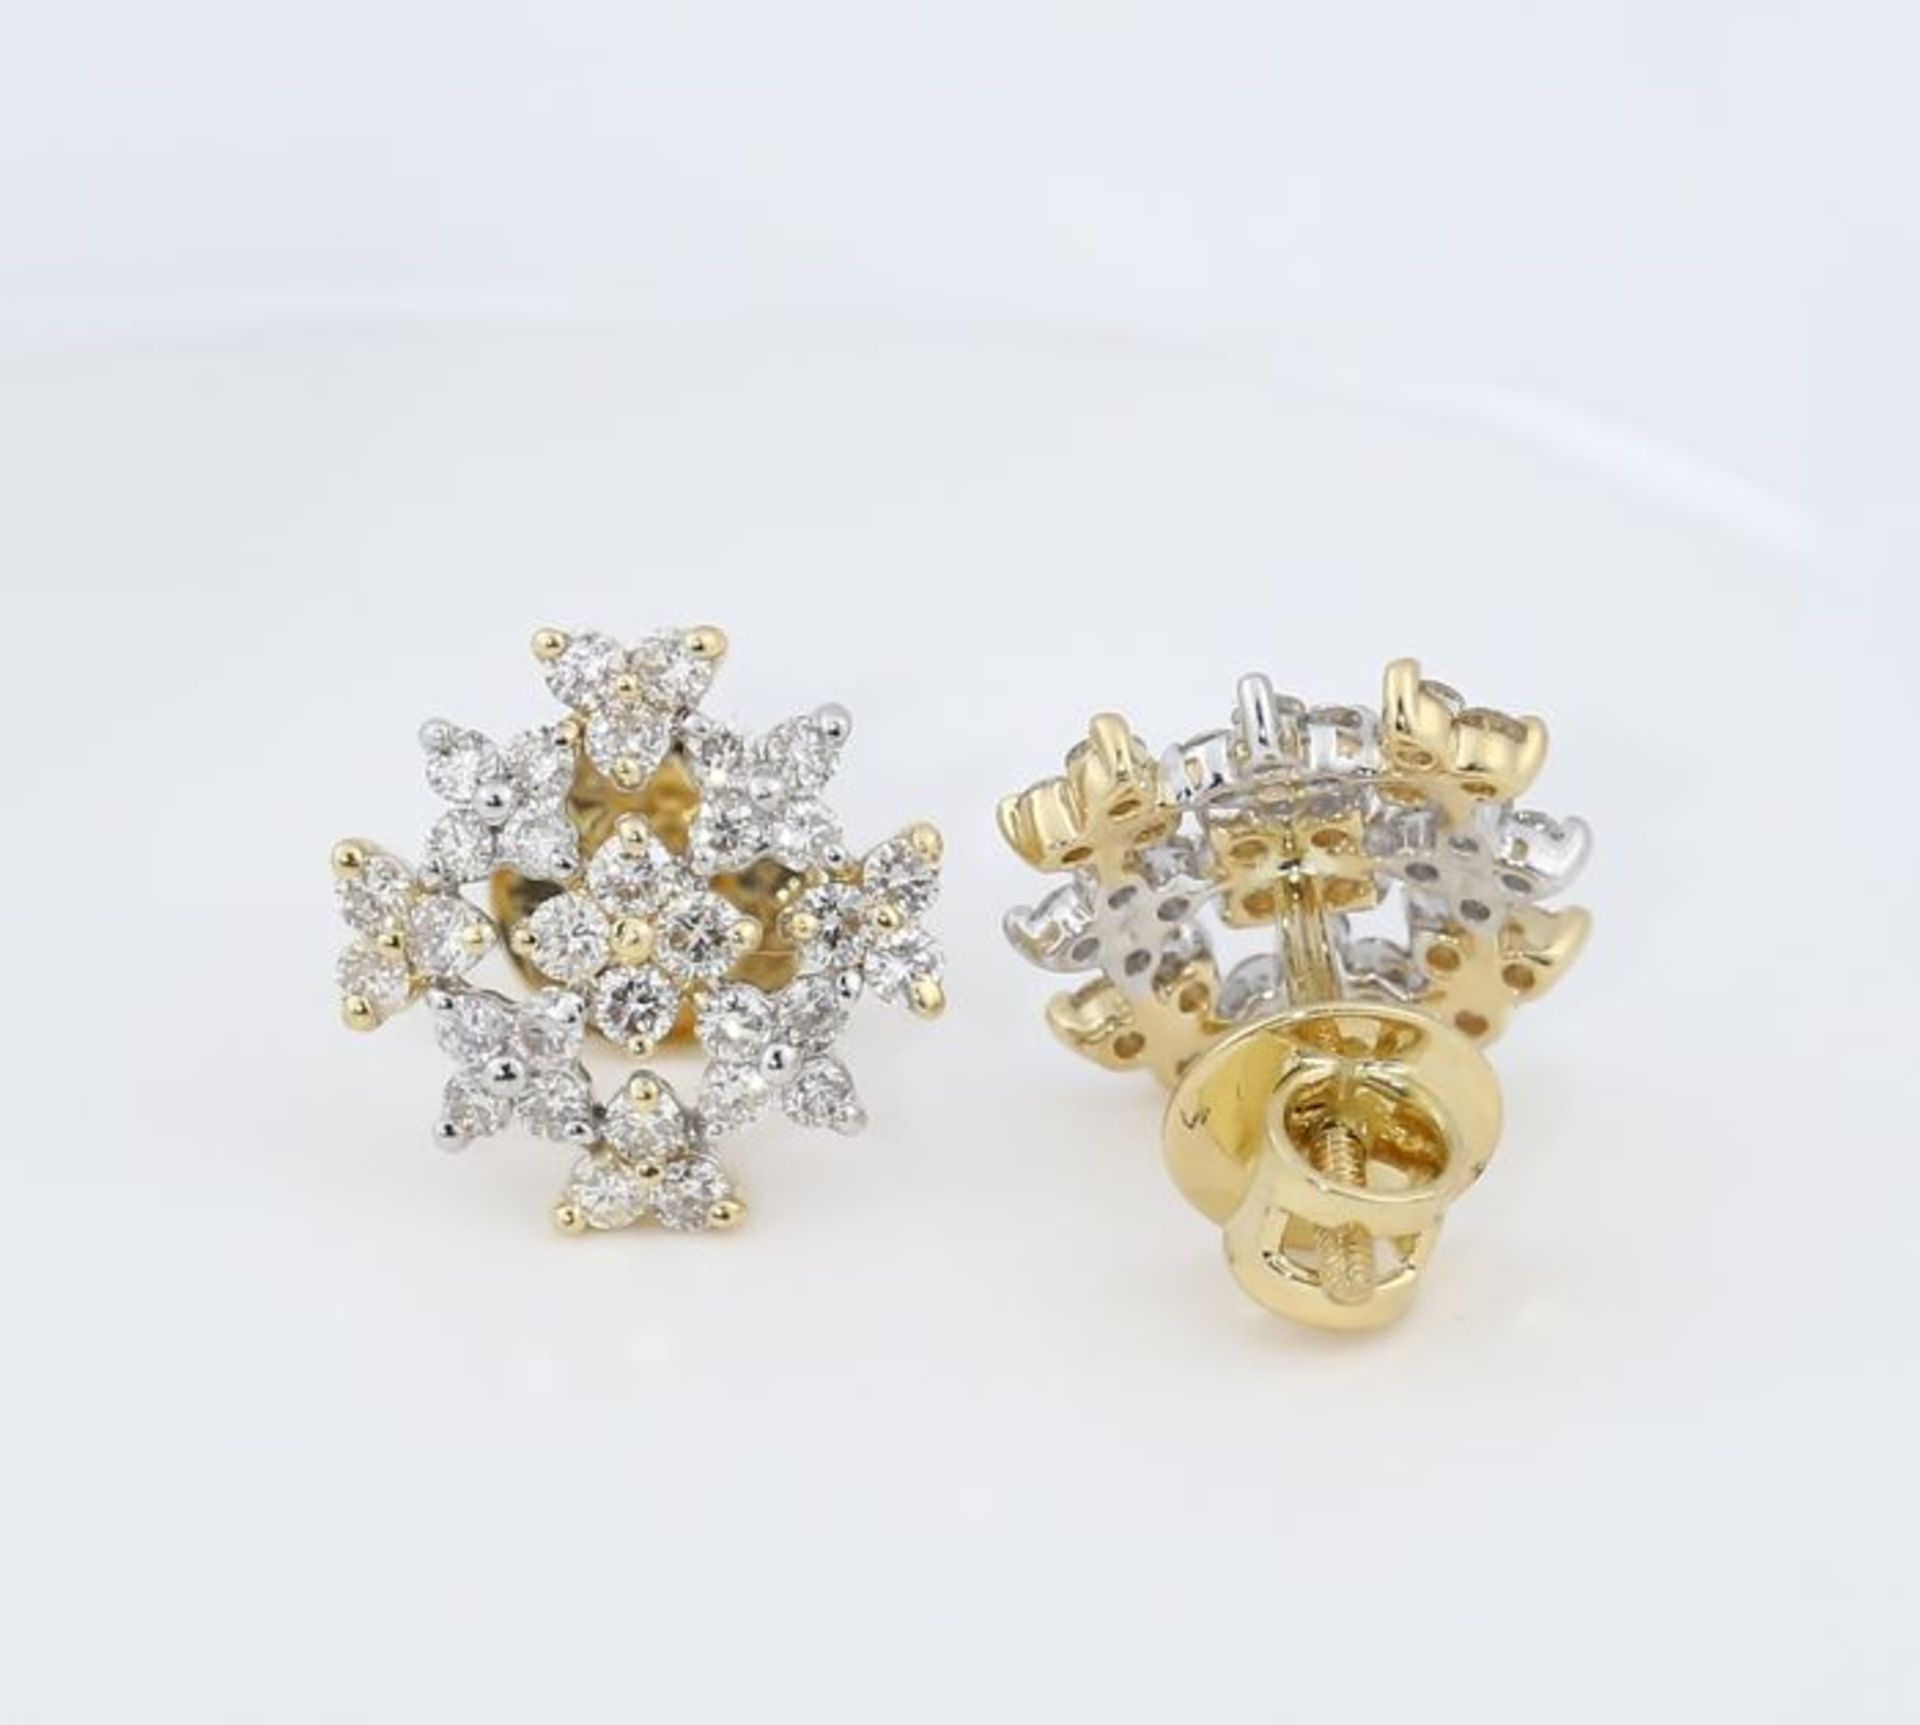 IGI Certified 18 K / 750 Yellow Gold Diamond Earrings - Image 5 of 7